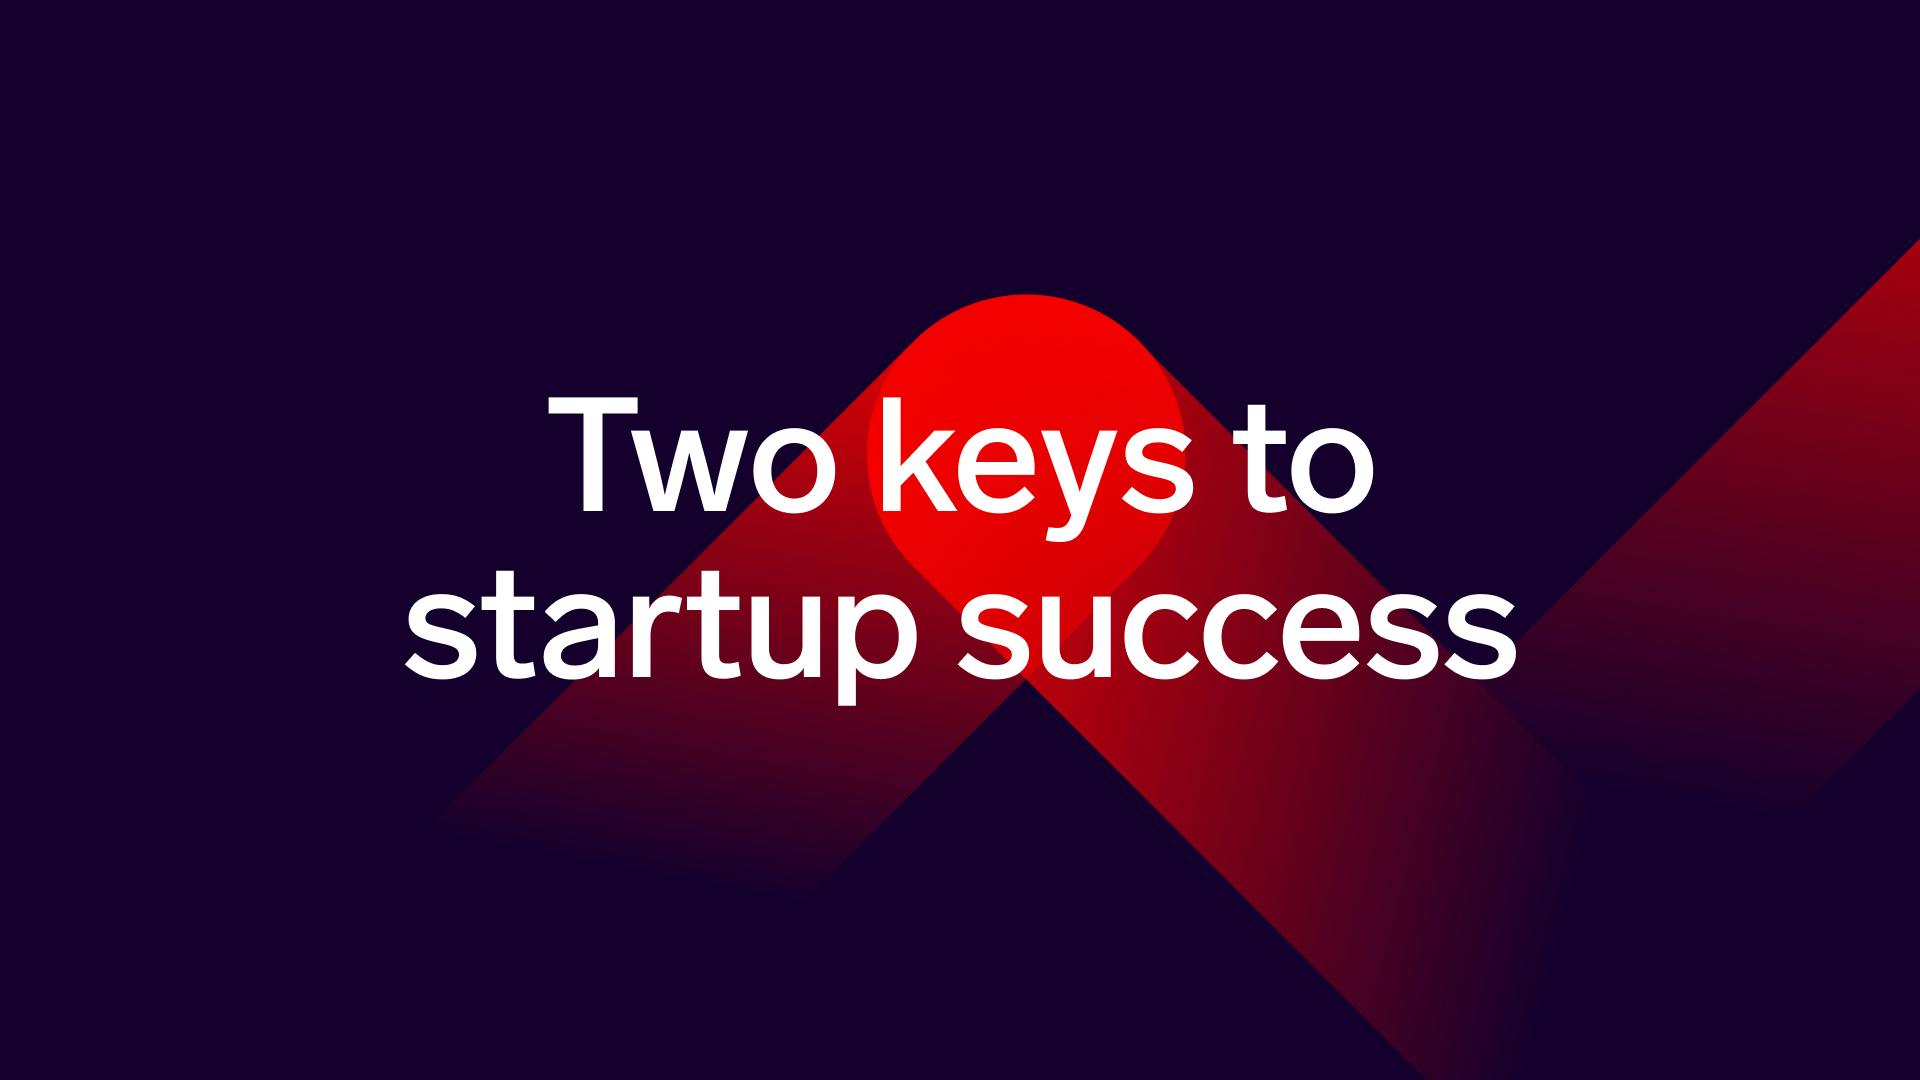 Image saying Two keys to startup success